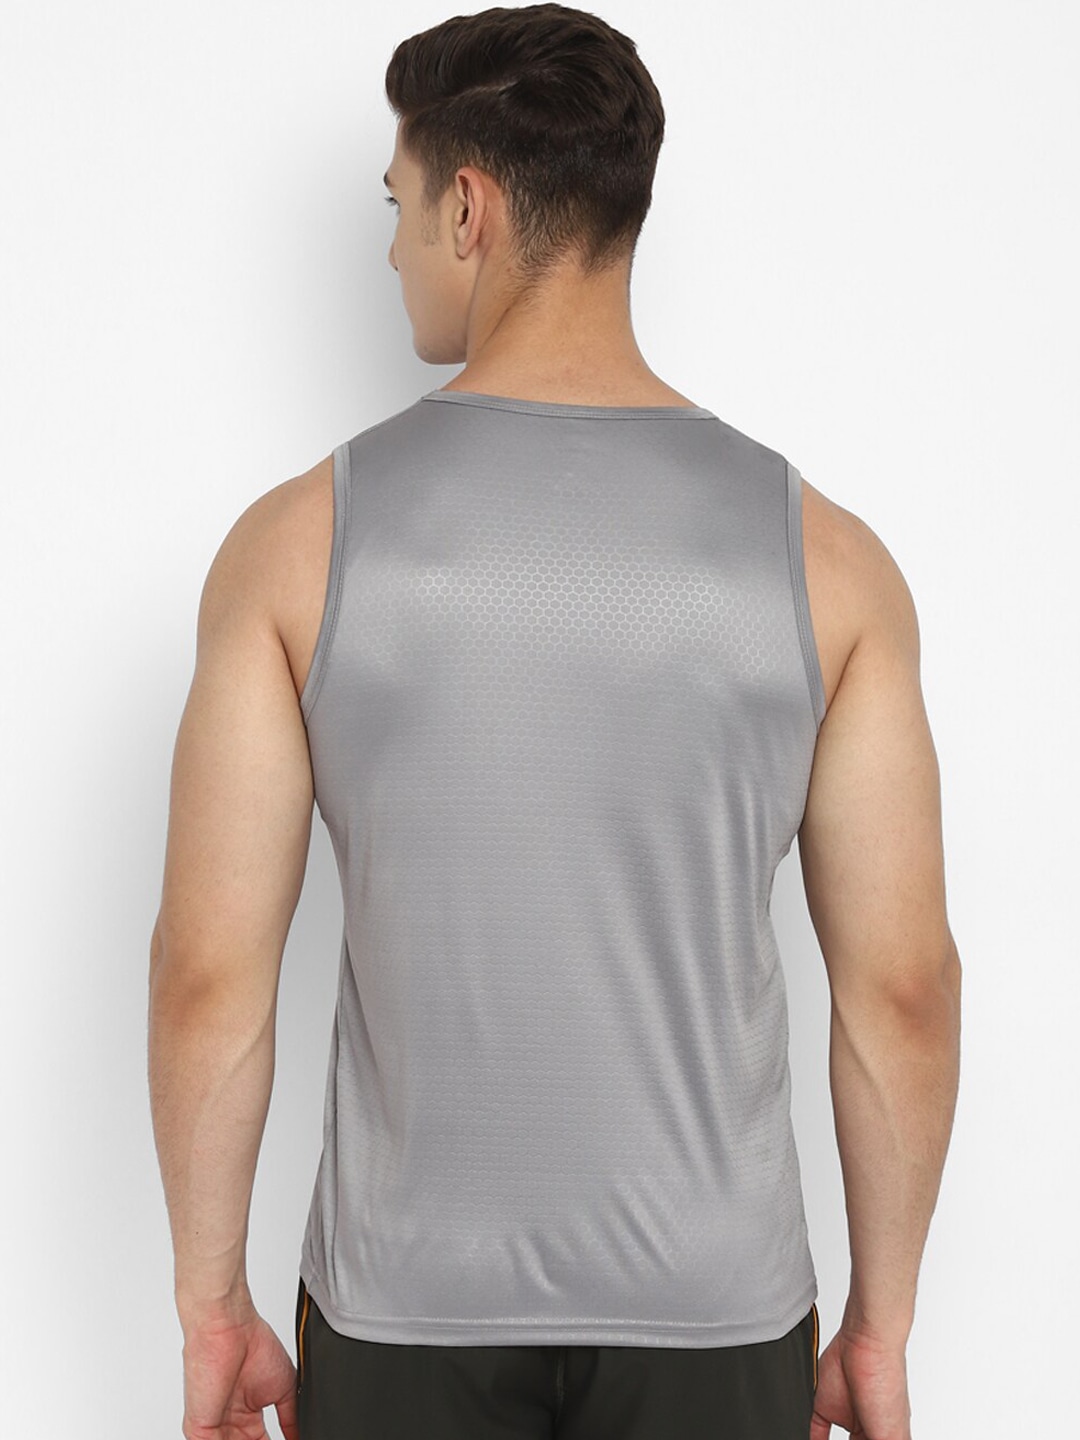 Clothing Innerwear Vests | HPS Sports Men Grey Solid Innerwear Gym Vests - TD63359